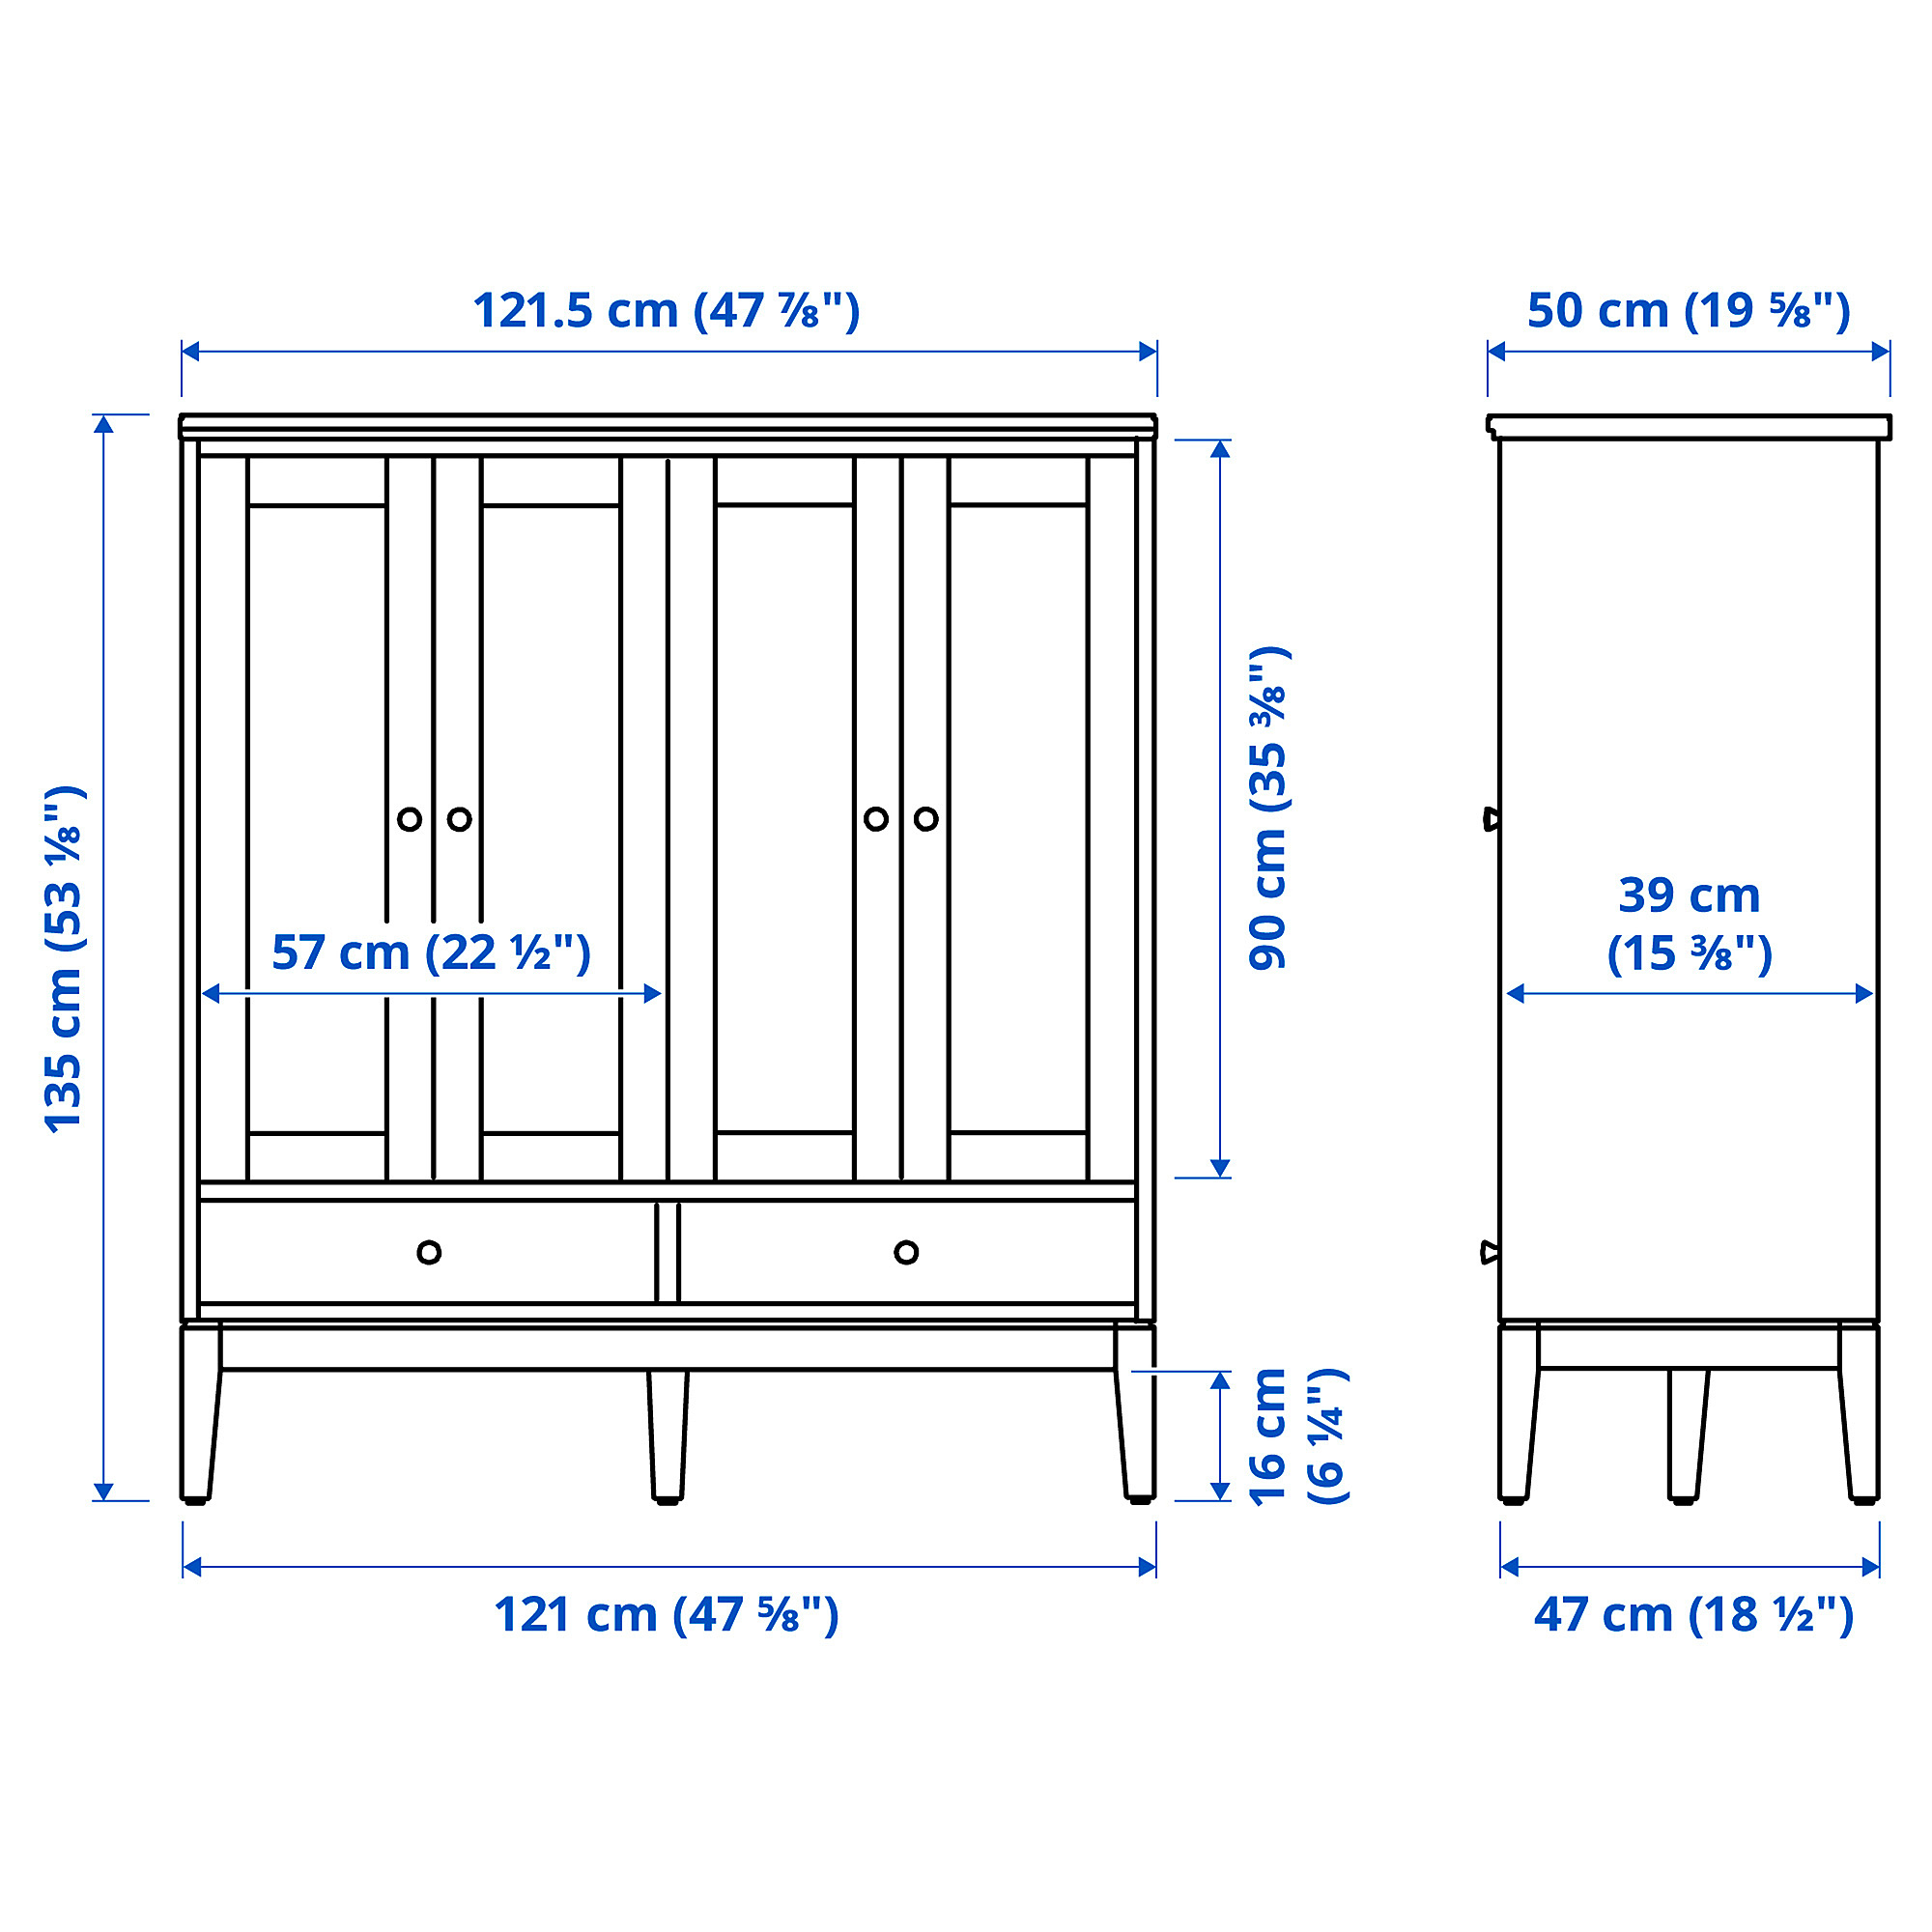 IDANÄS cabinet with bi-folded glass doors